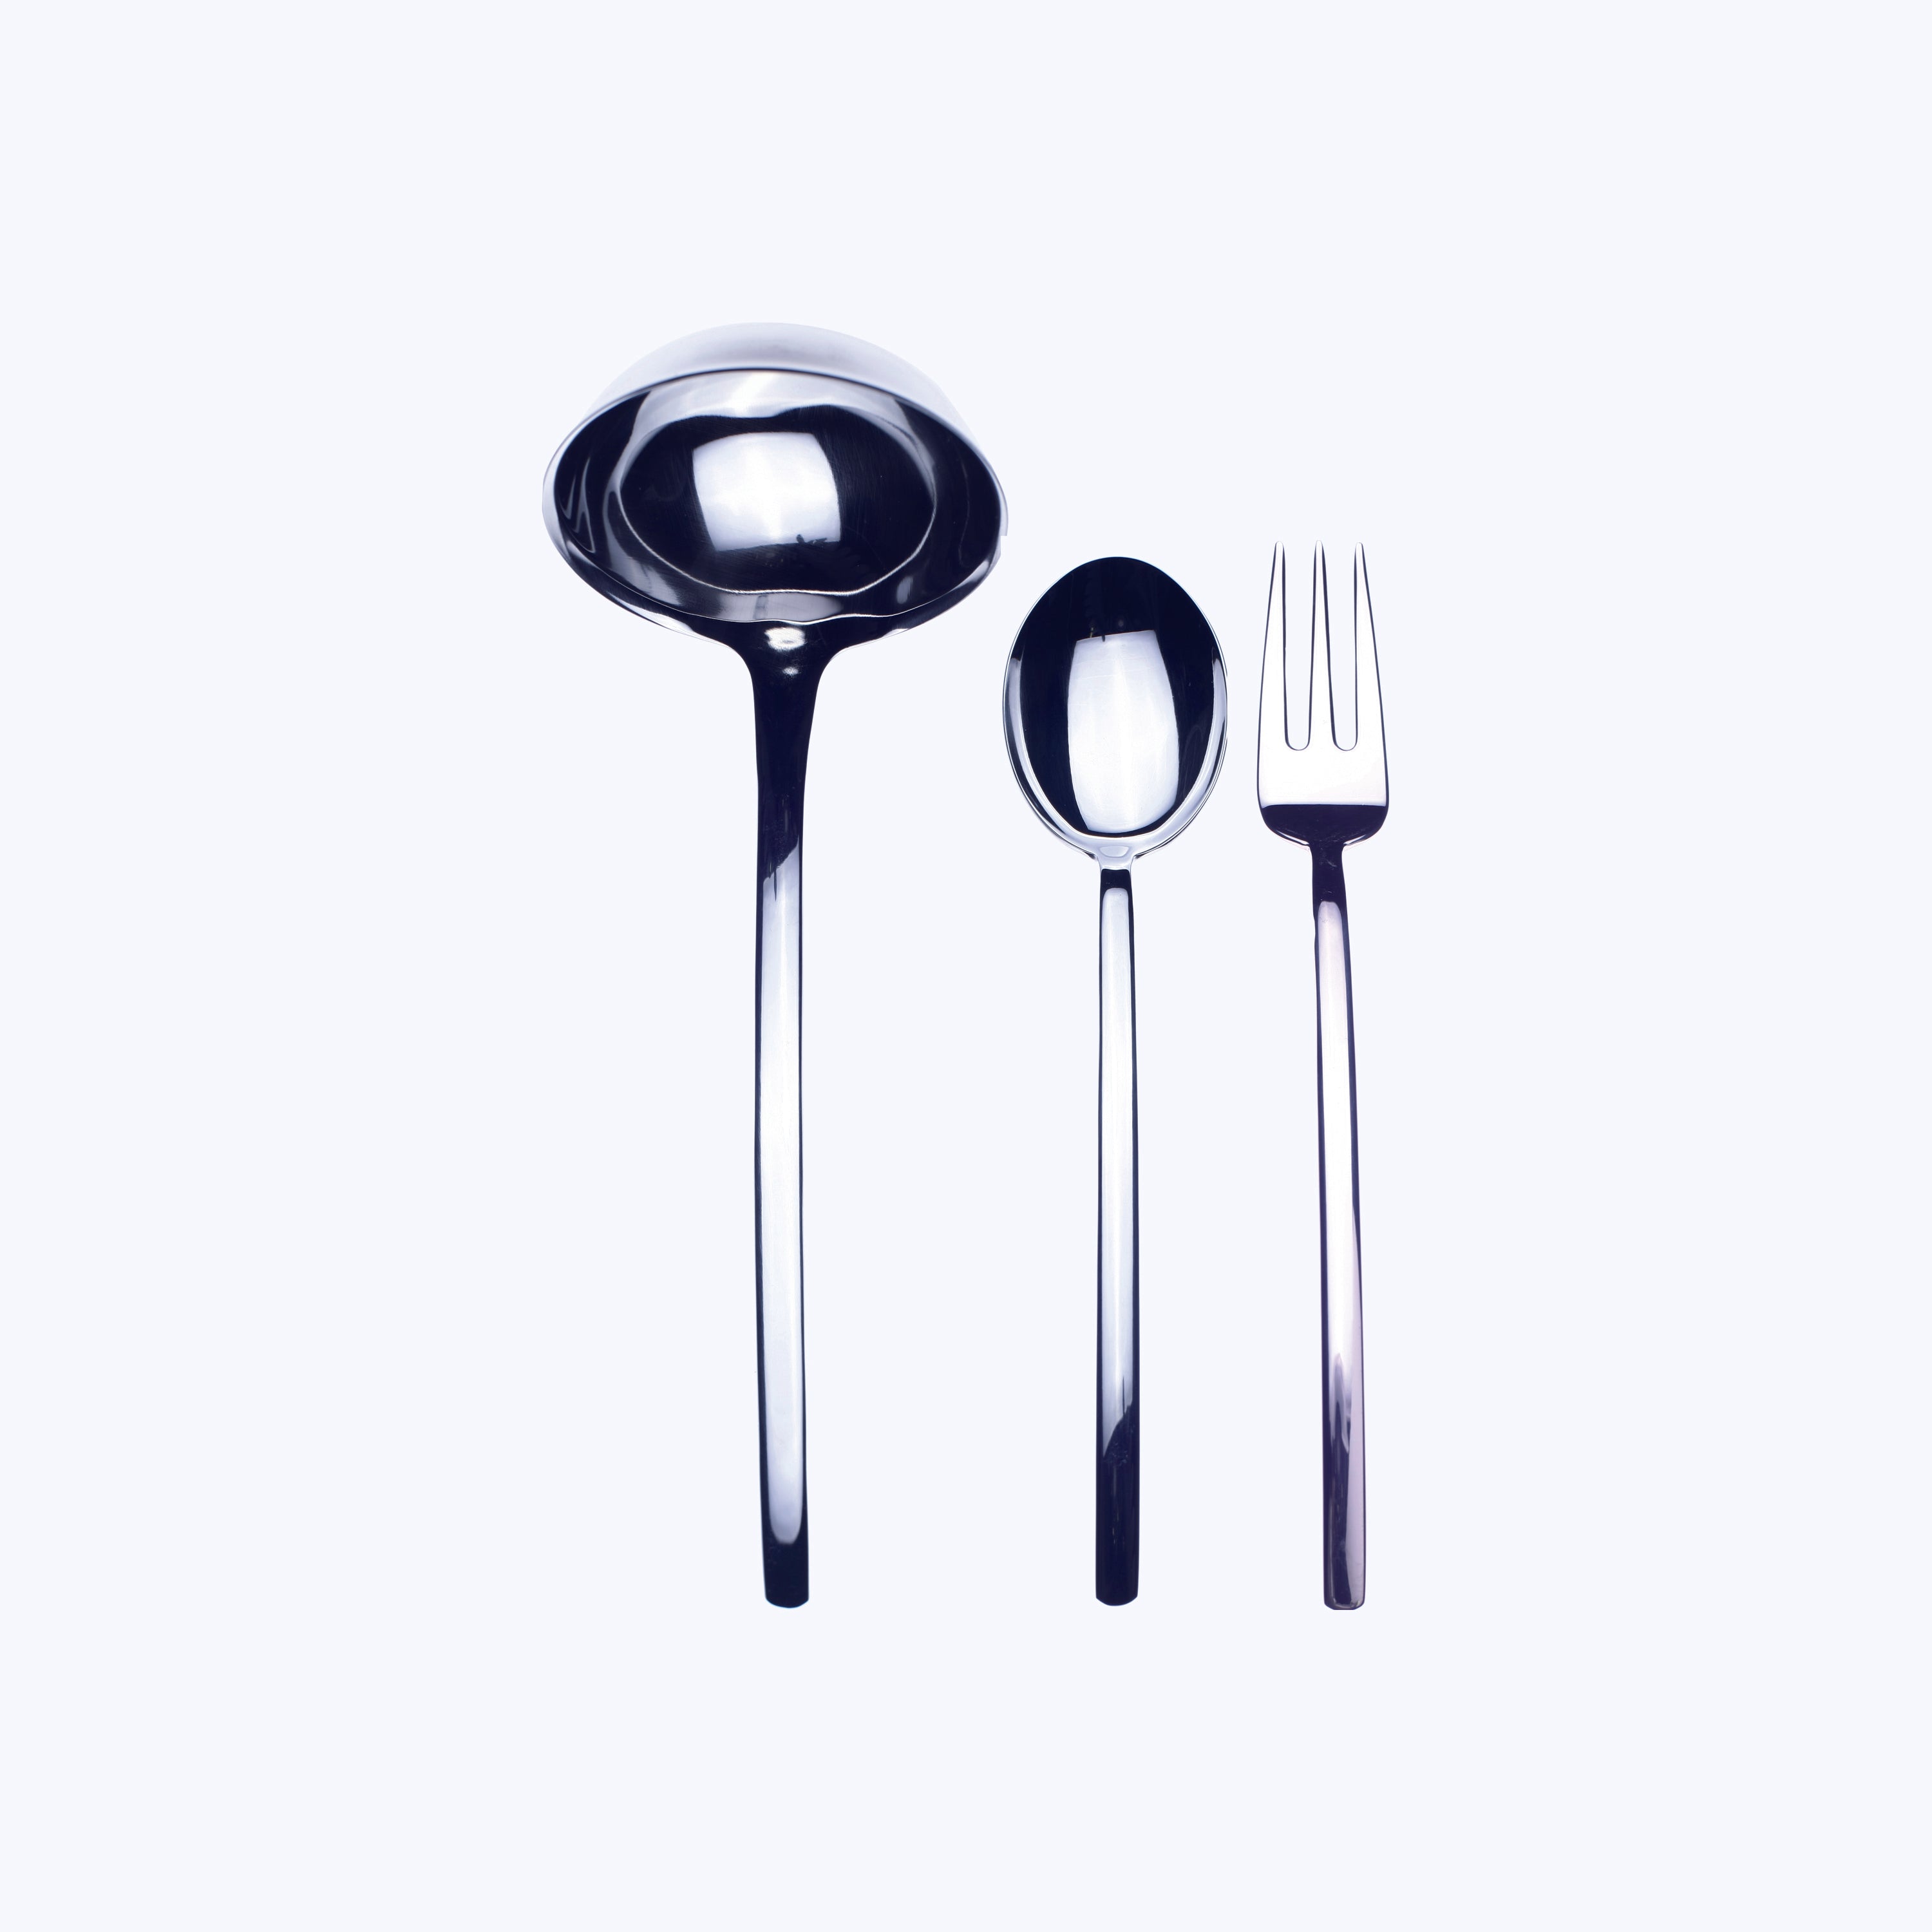 Due Serveware, Mirror Finish Stainless Steel / 3 Piece Serving Set (Fork, Spoon, Ladle)